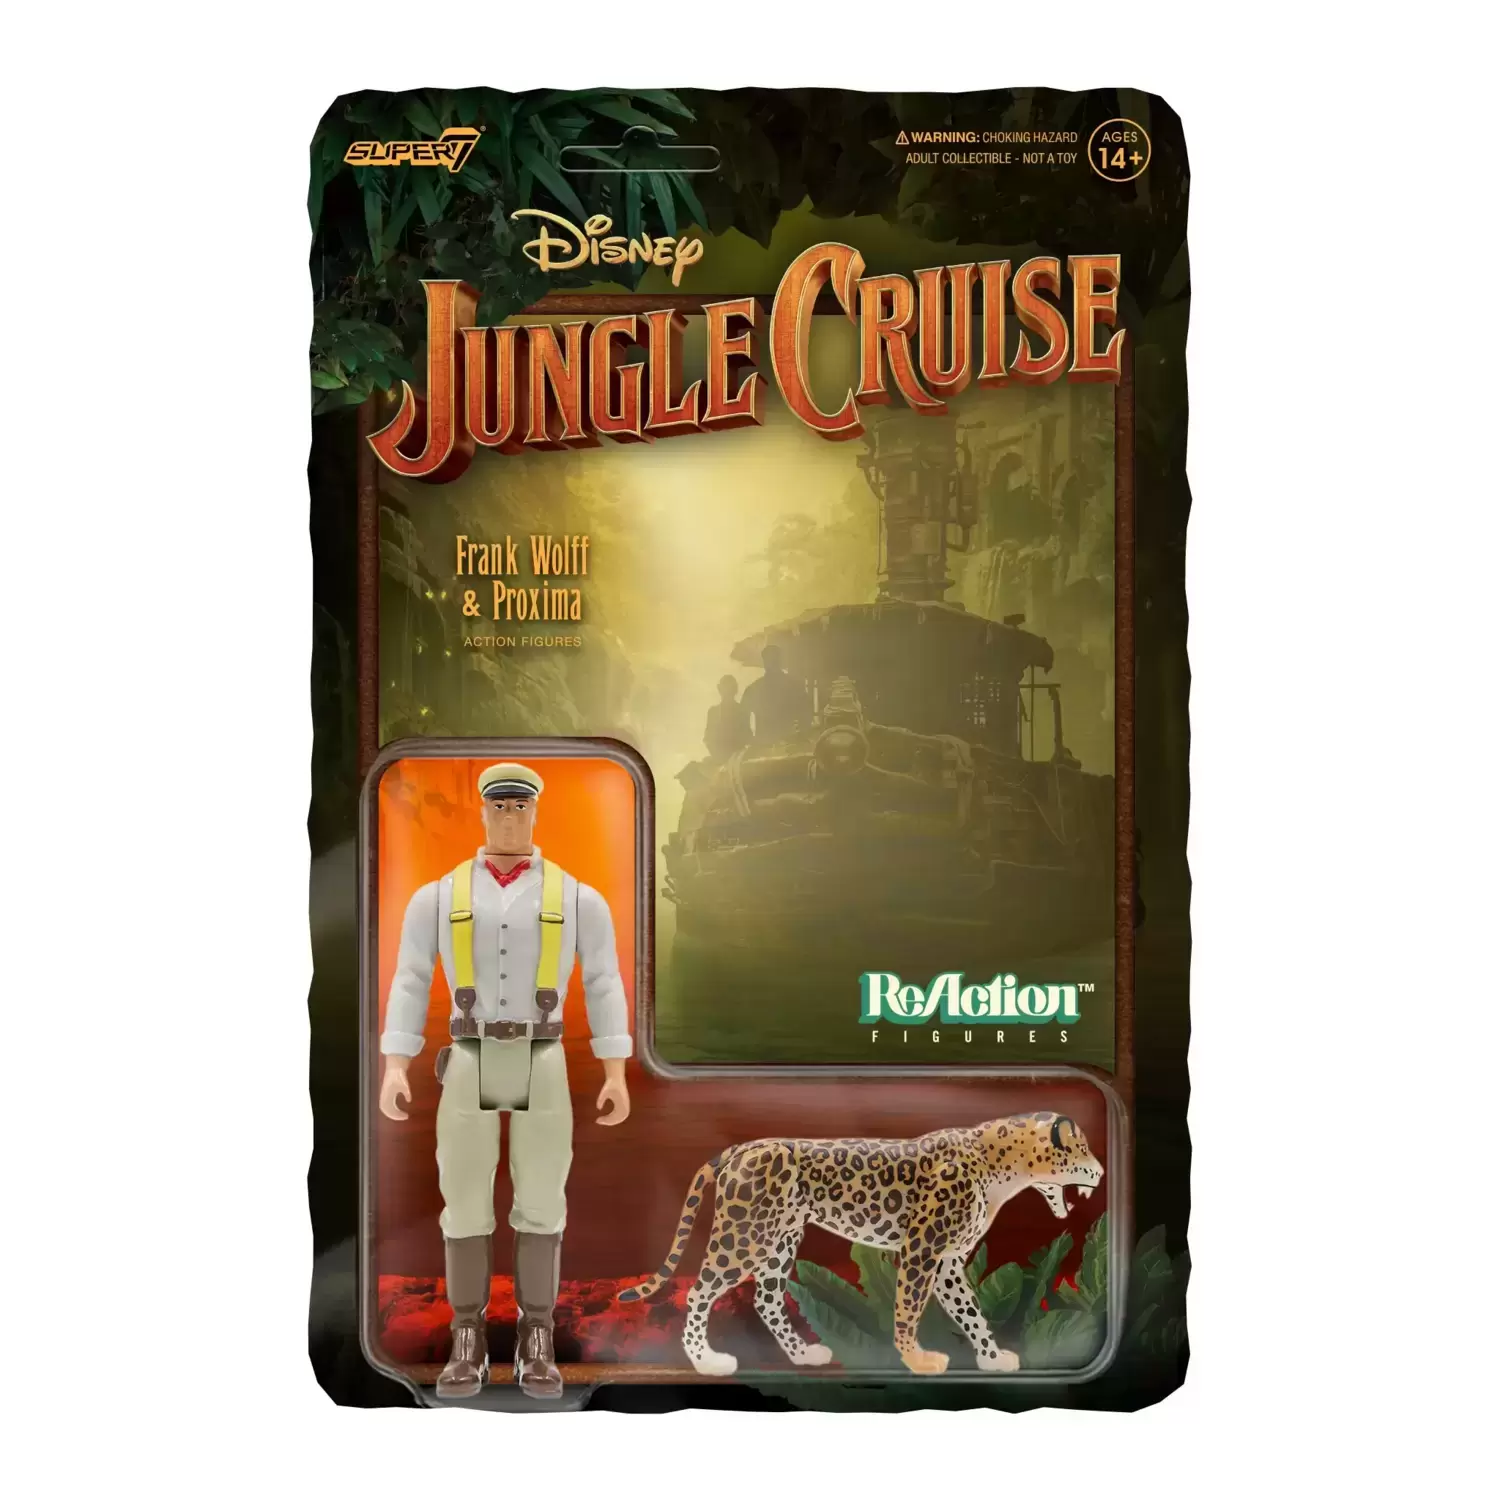 ReAction Figures - Jungle Cruise -  Frank Wolff & Proxima